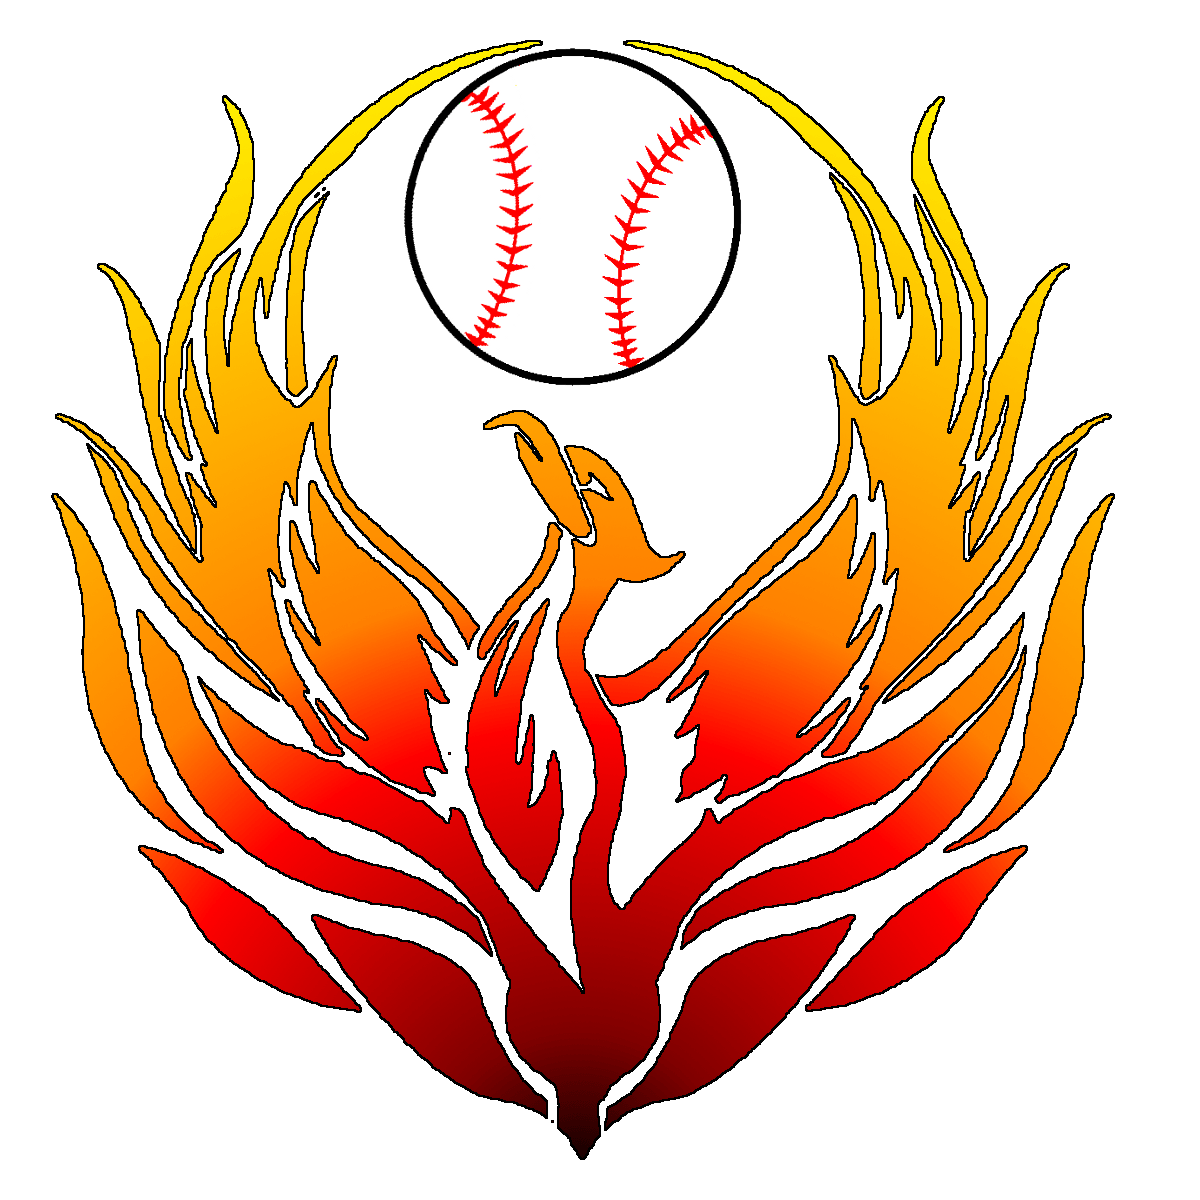 Phoenix Baseball Logo - Phoenix sans baseball. Tattoos I might want to get. Phoenix